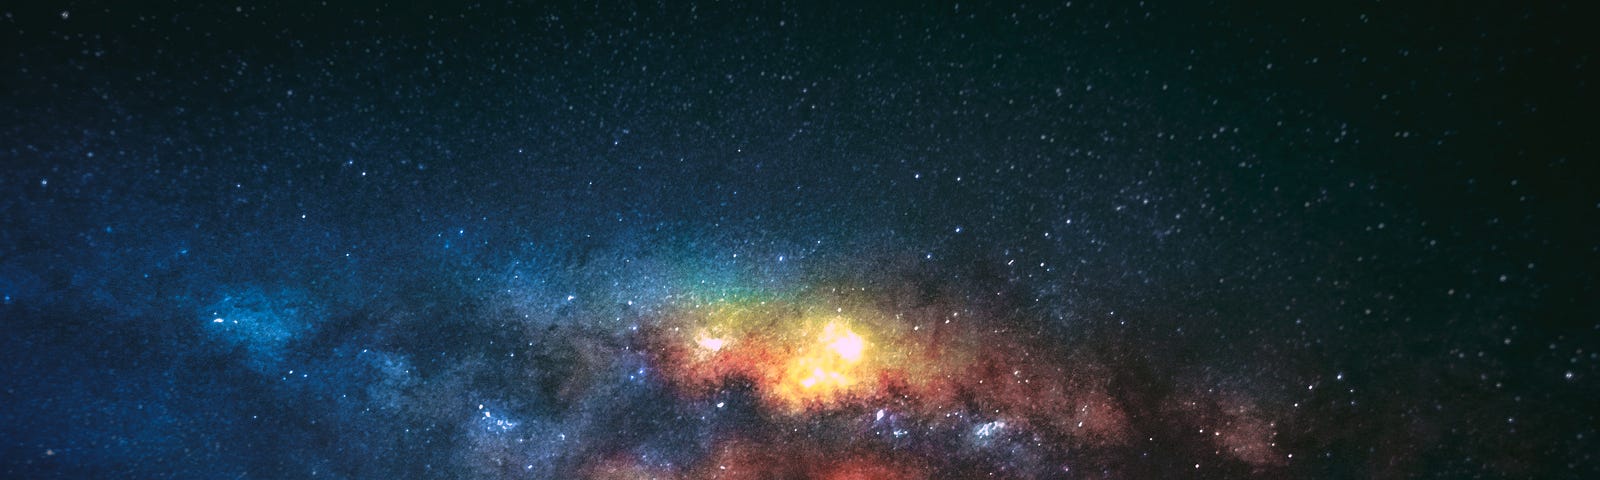 Photo of the night sky through a powerful telescope